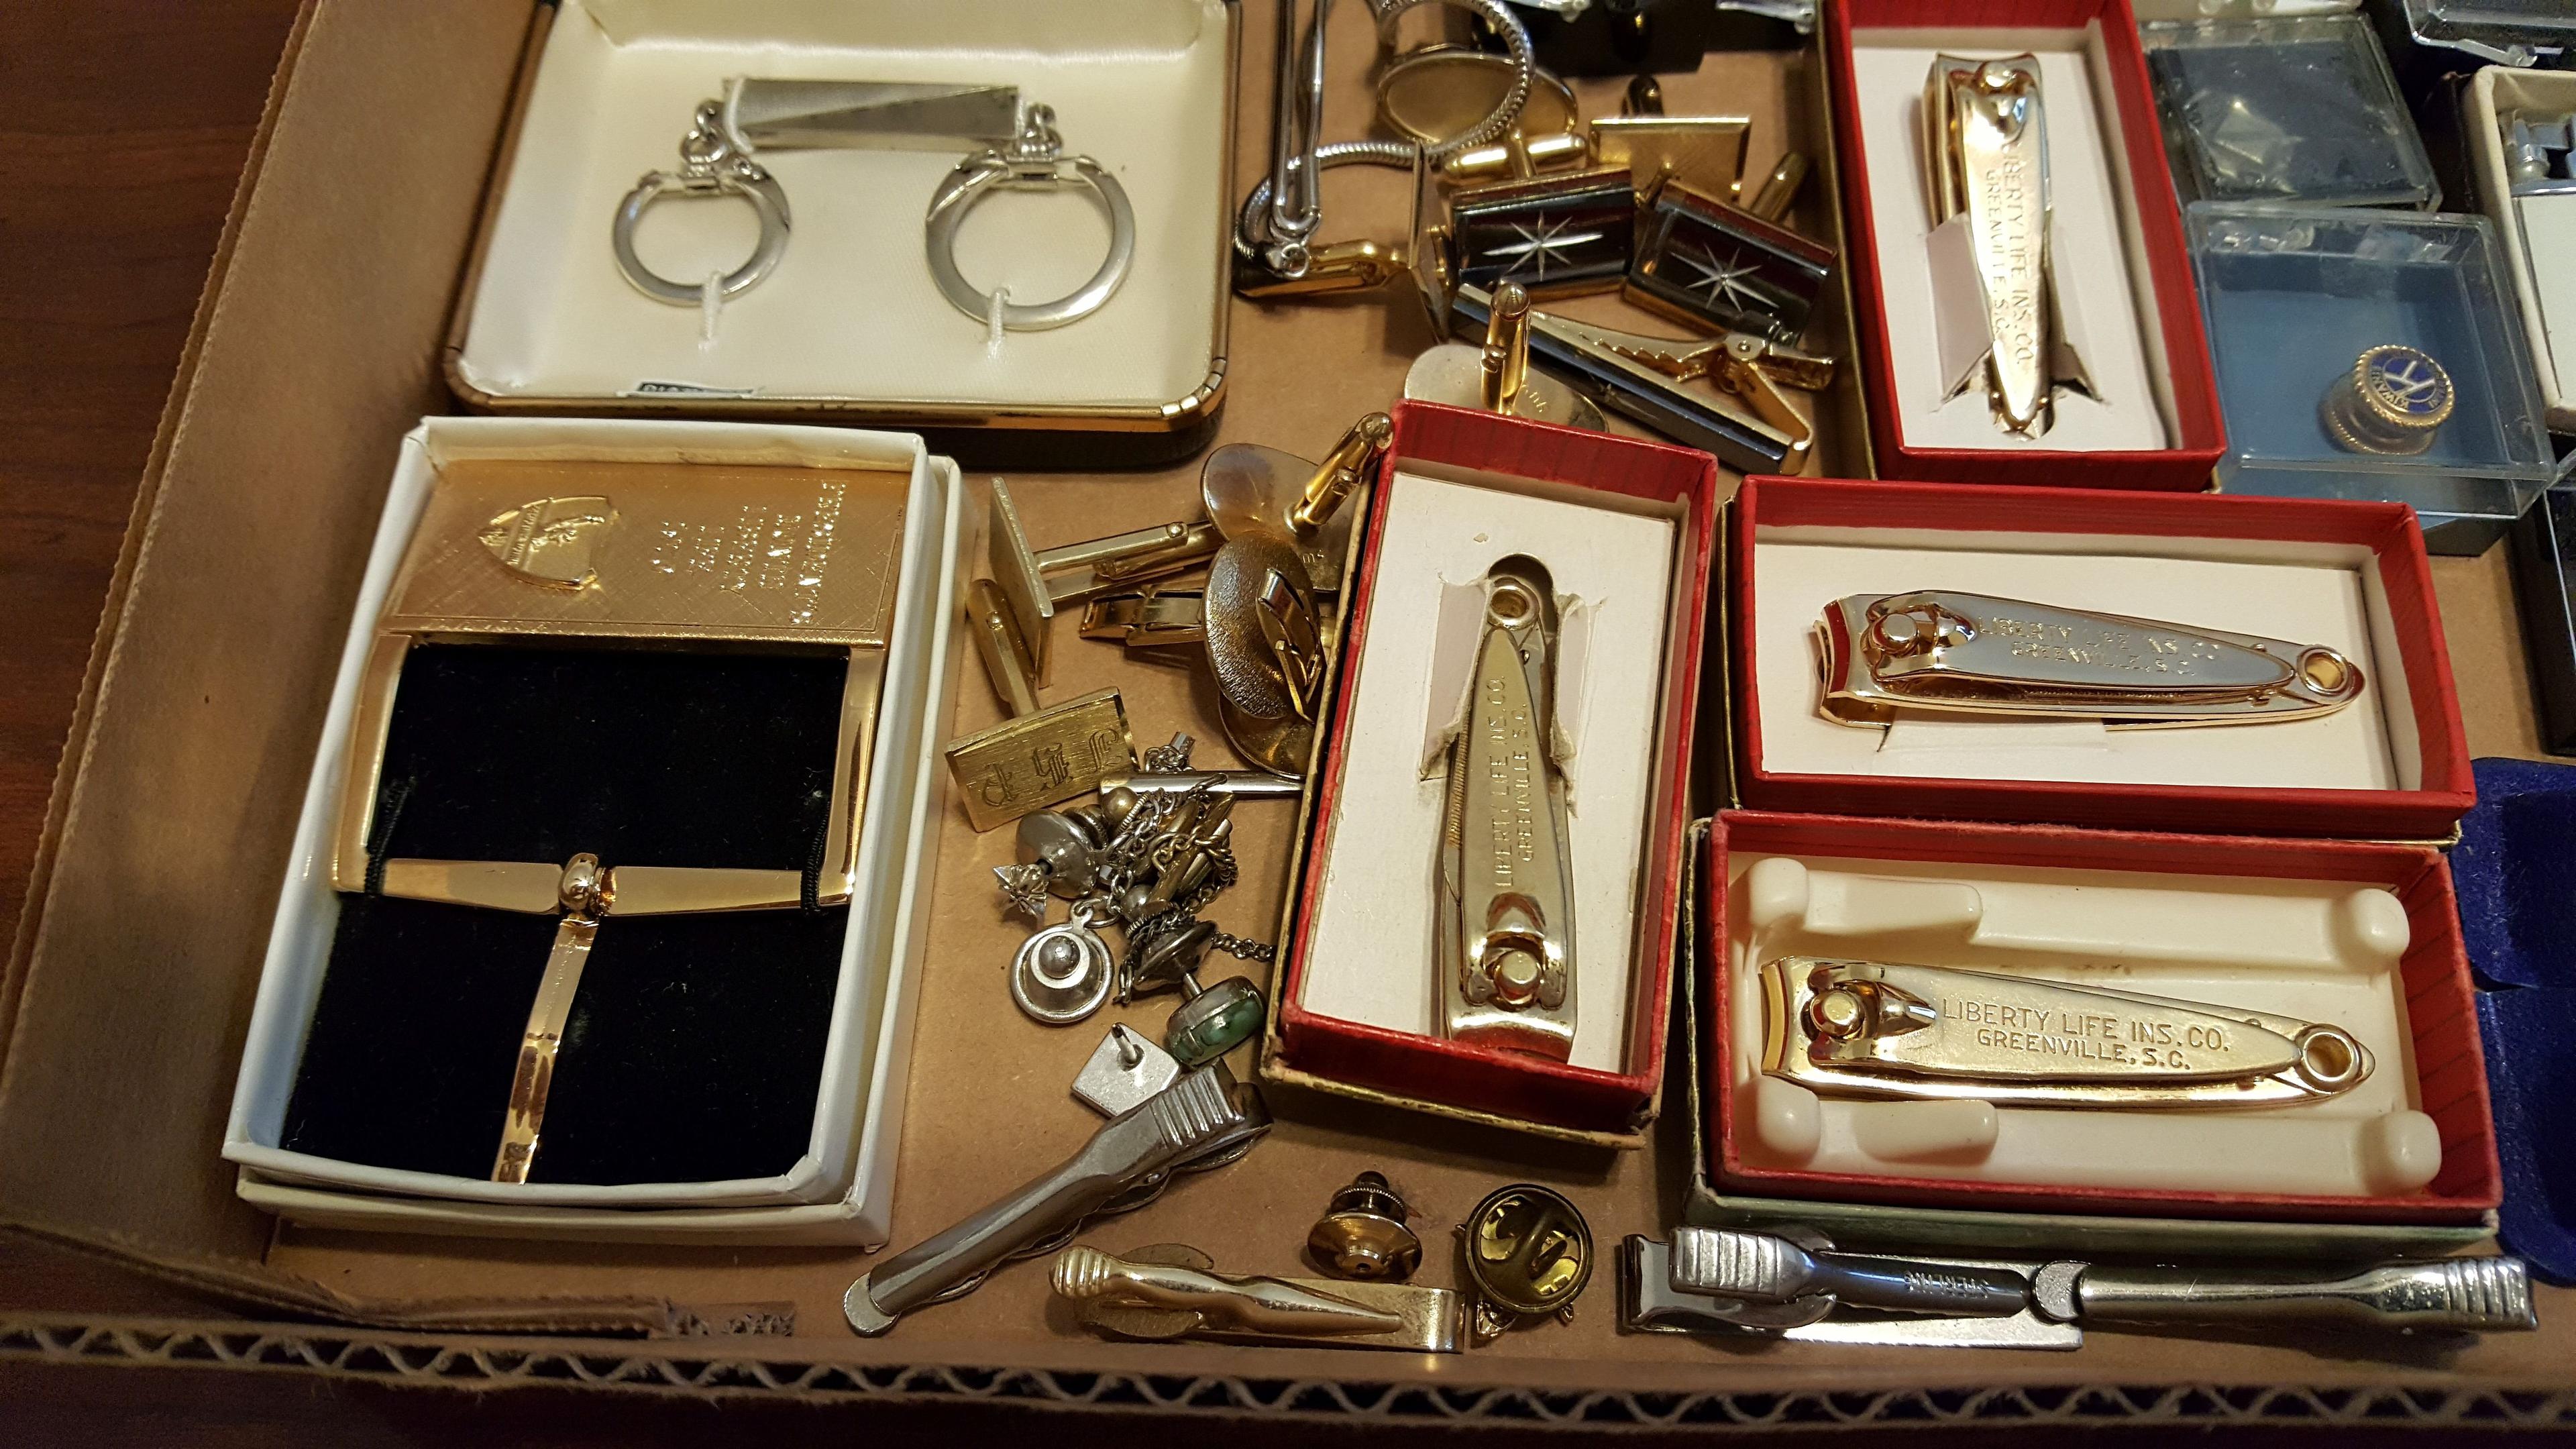 Box lot of Cufflinks, Lighters, Tie Pins, Masonic Items